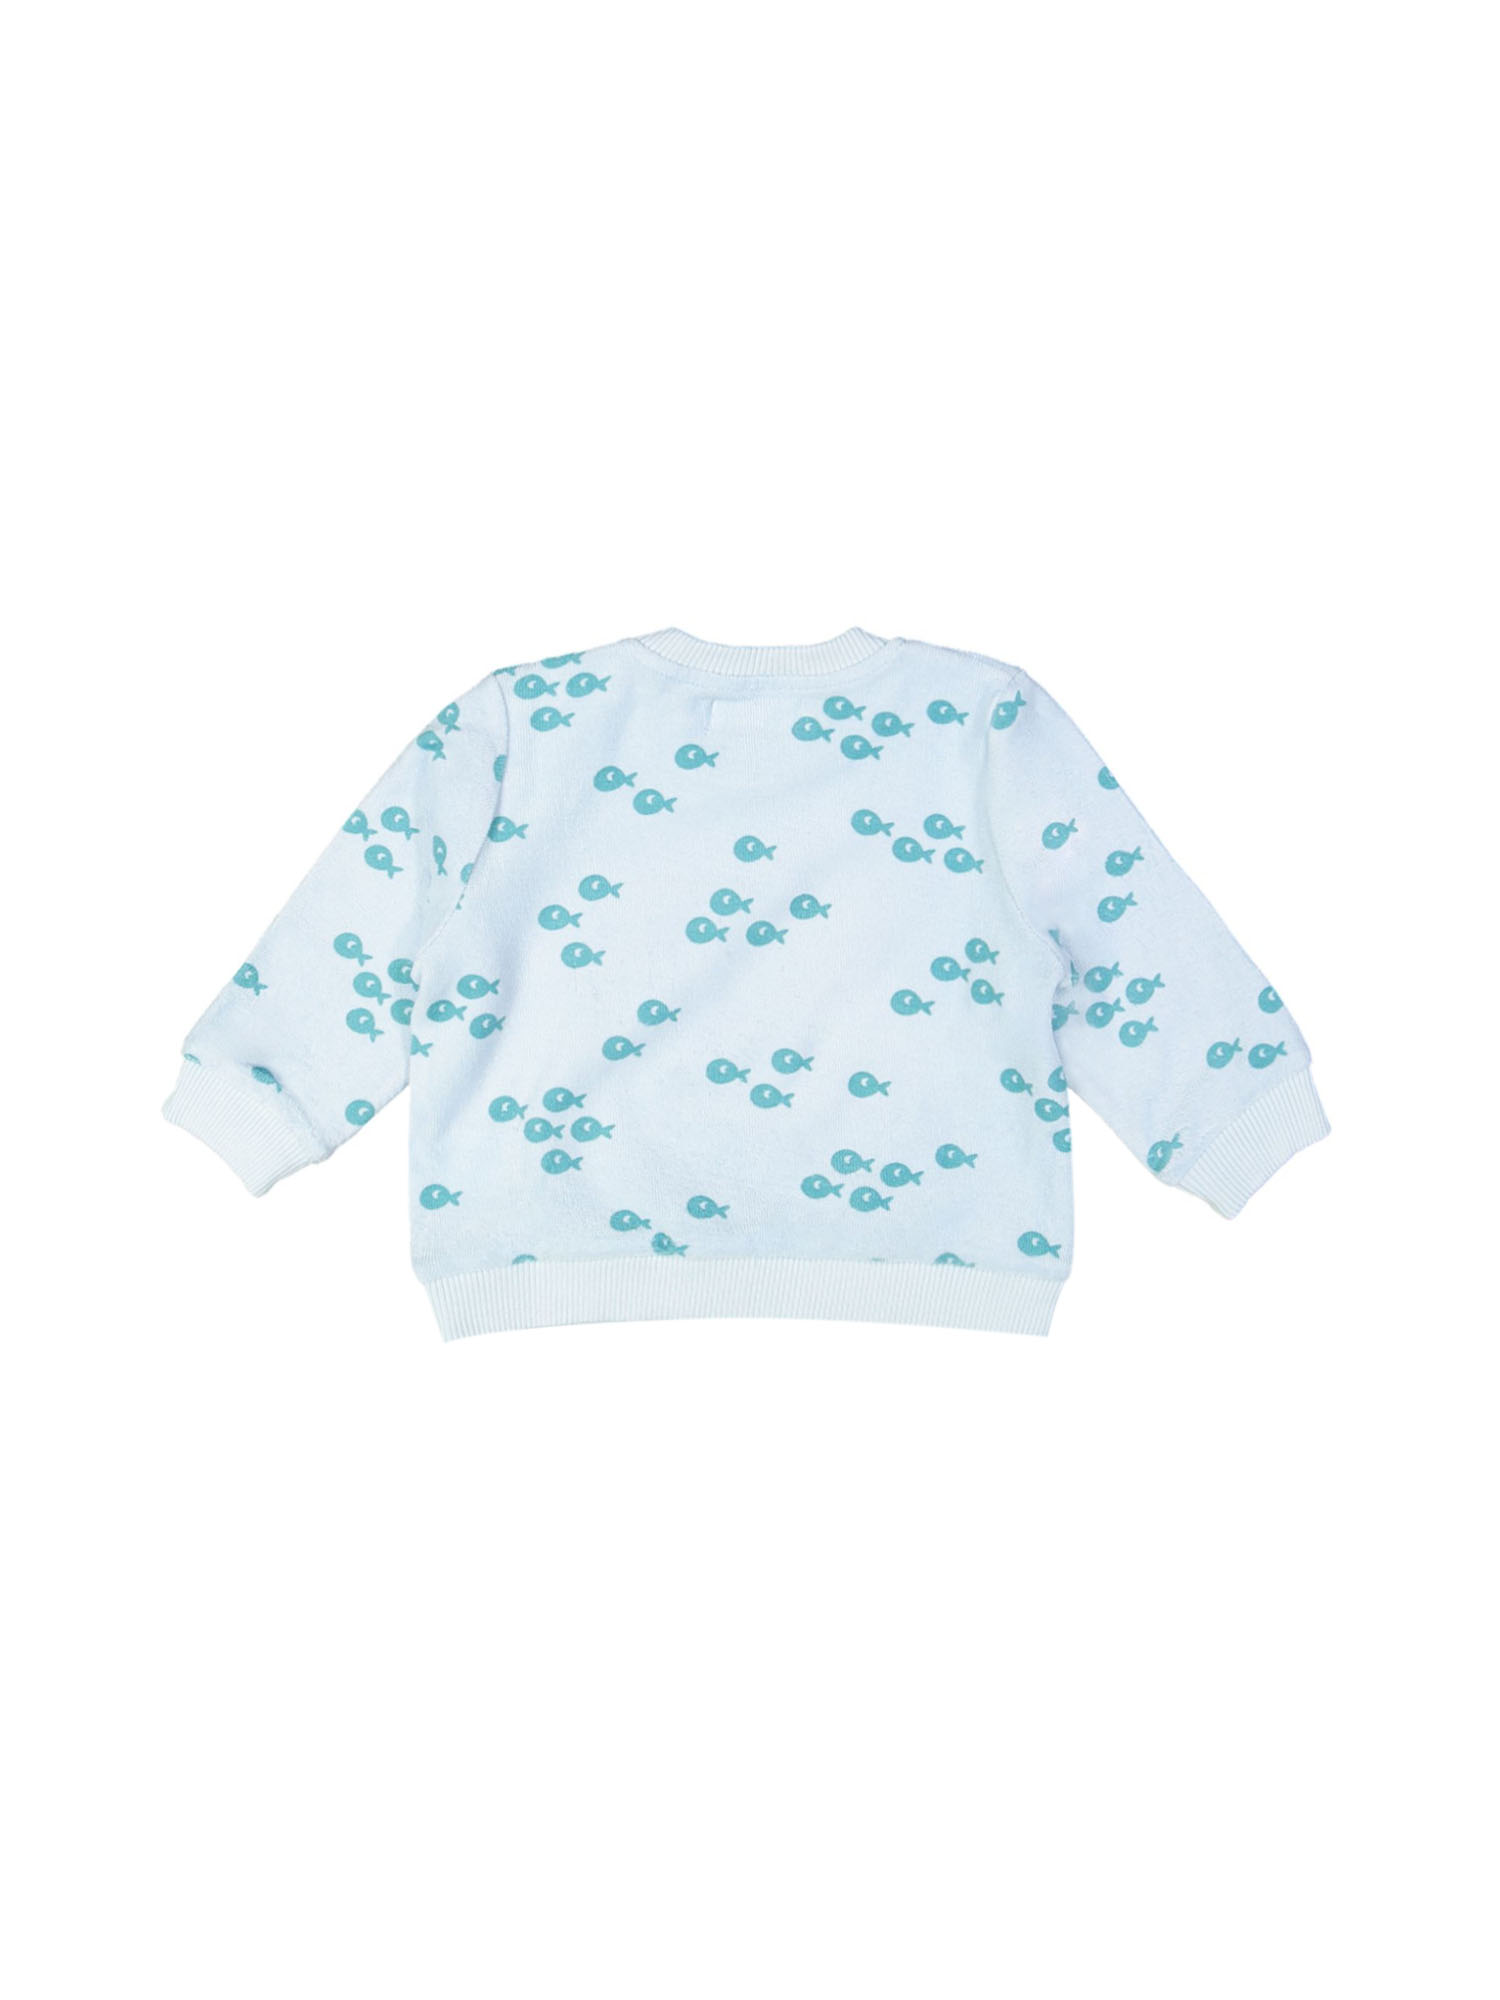 sweater mini école poisson bleu clair